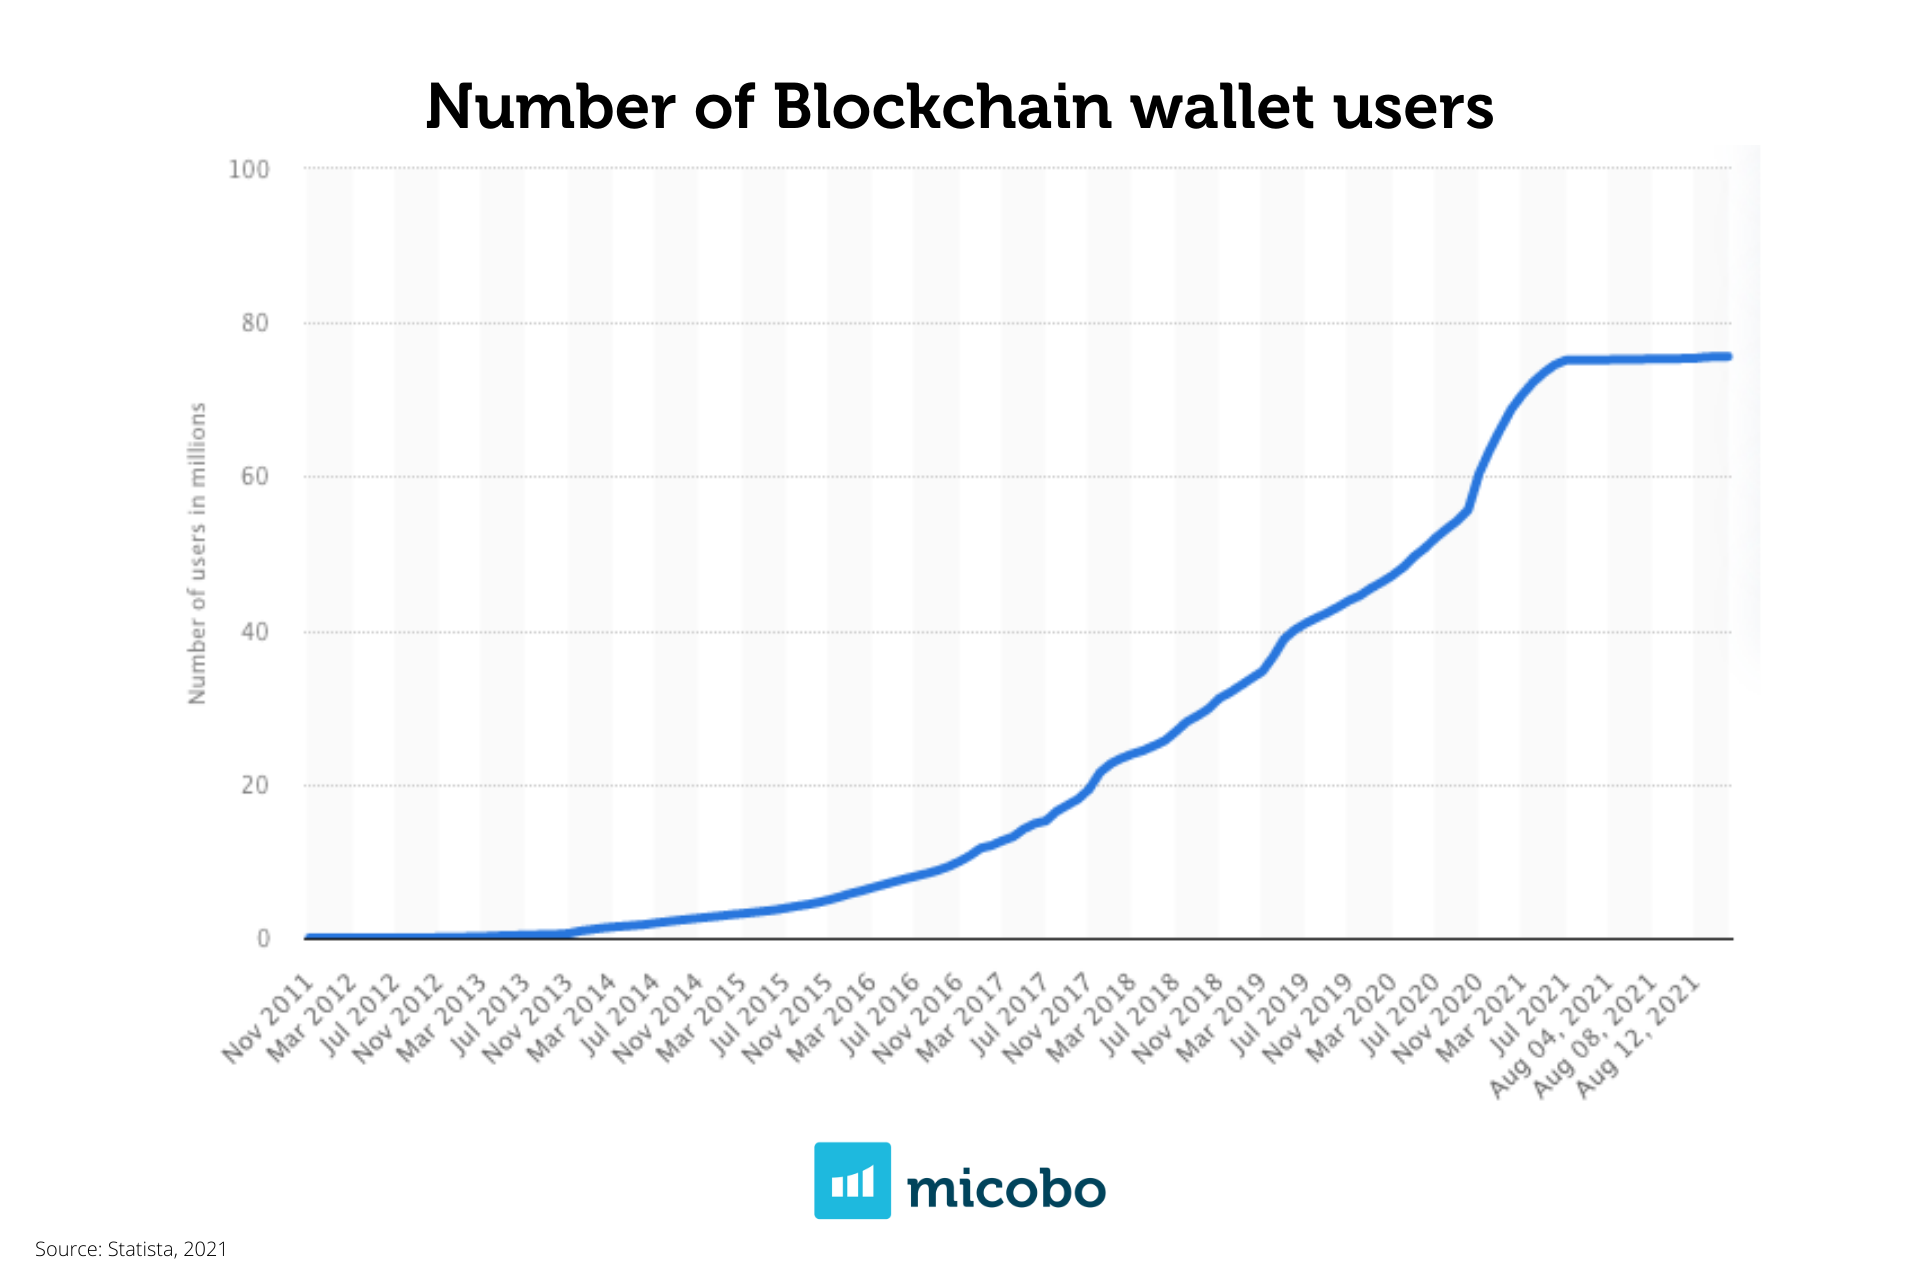 Blockchain wallet users